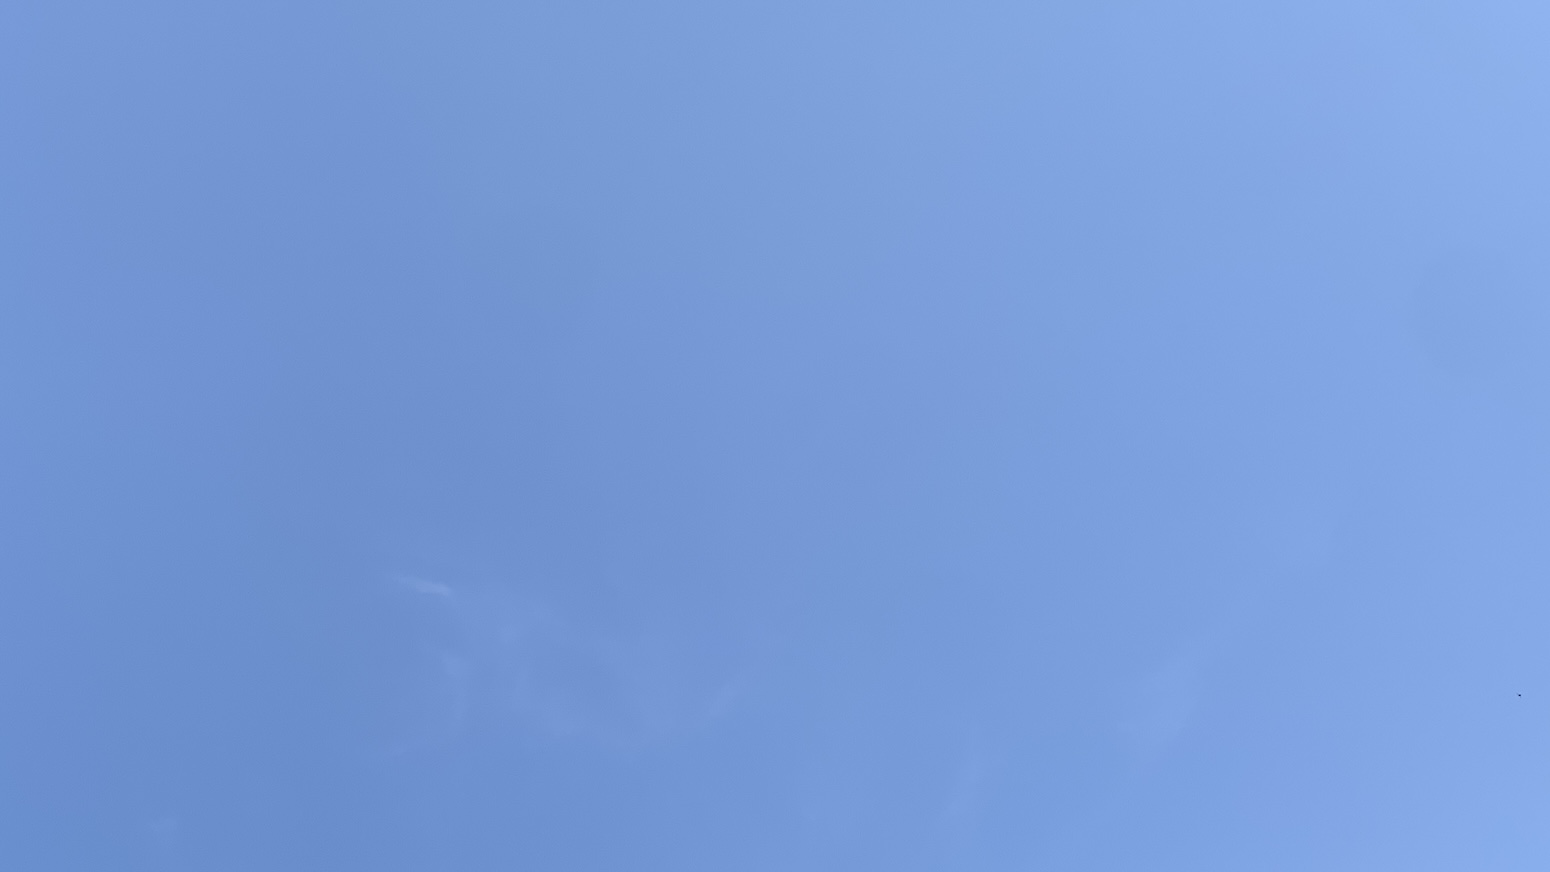 A baby-blue sky, no clouds, seems hazy